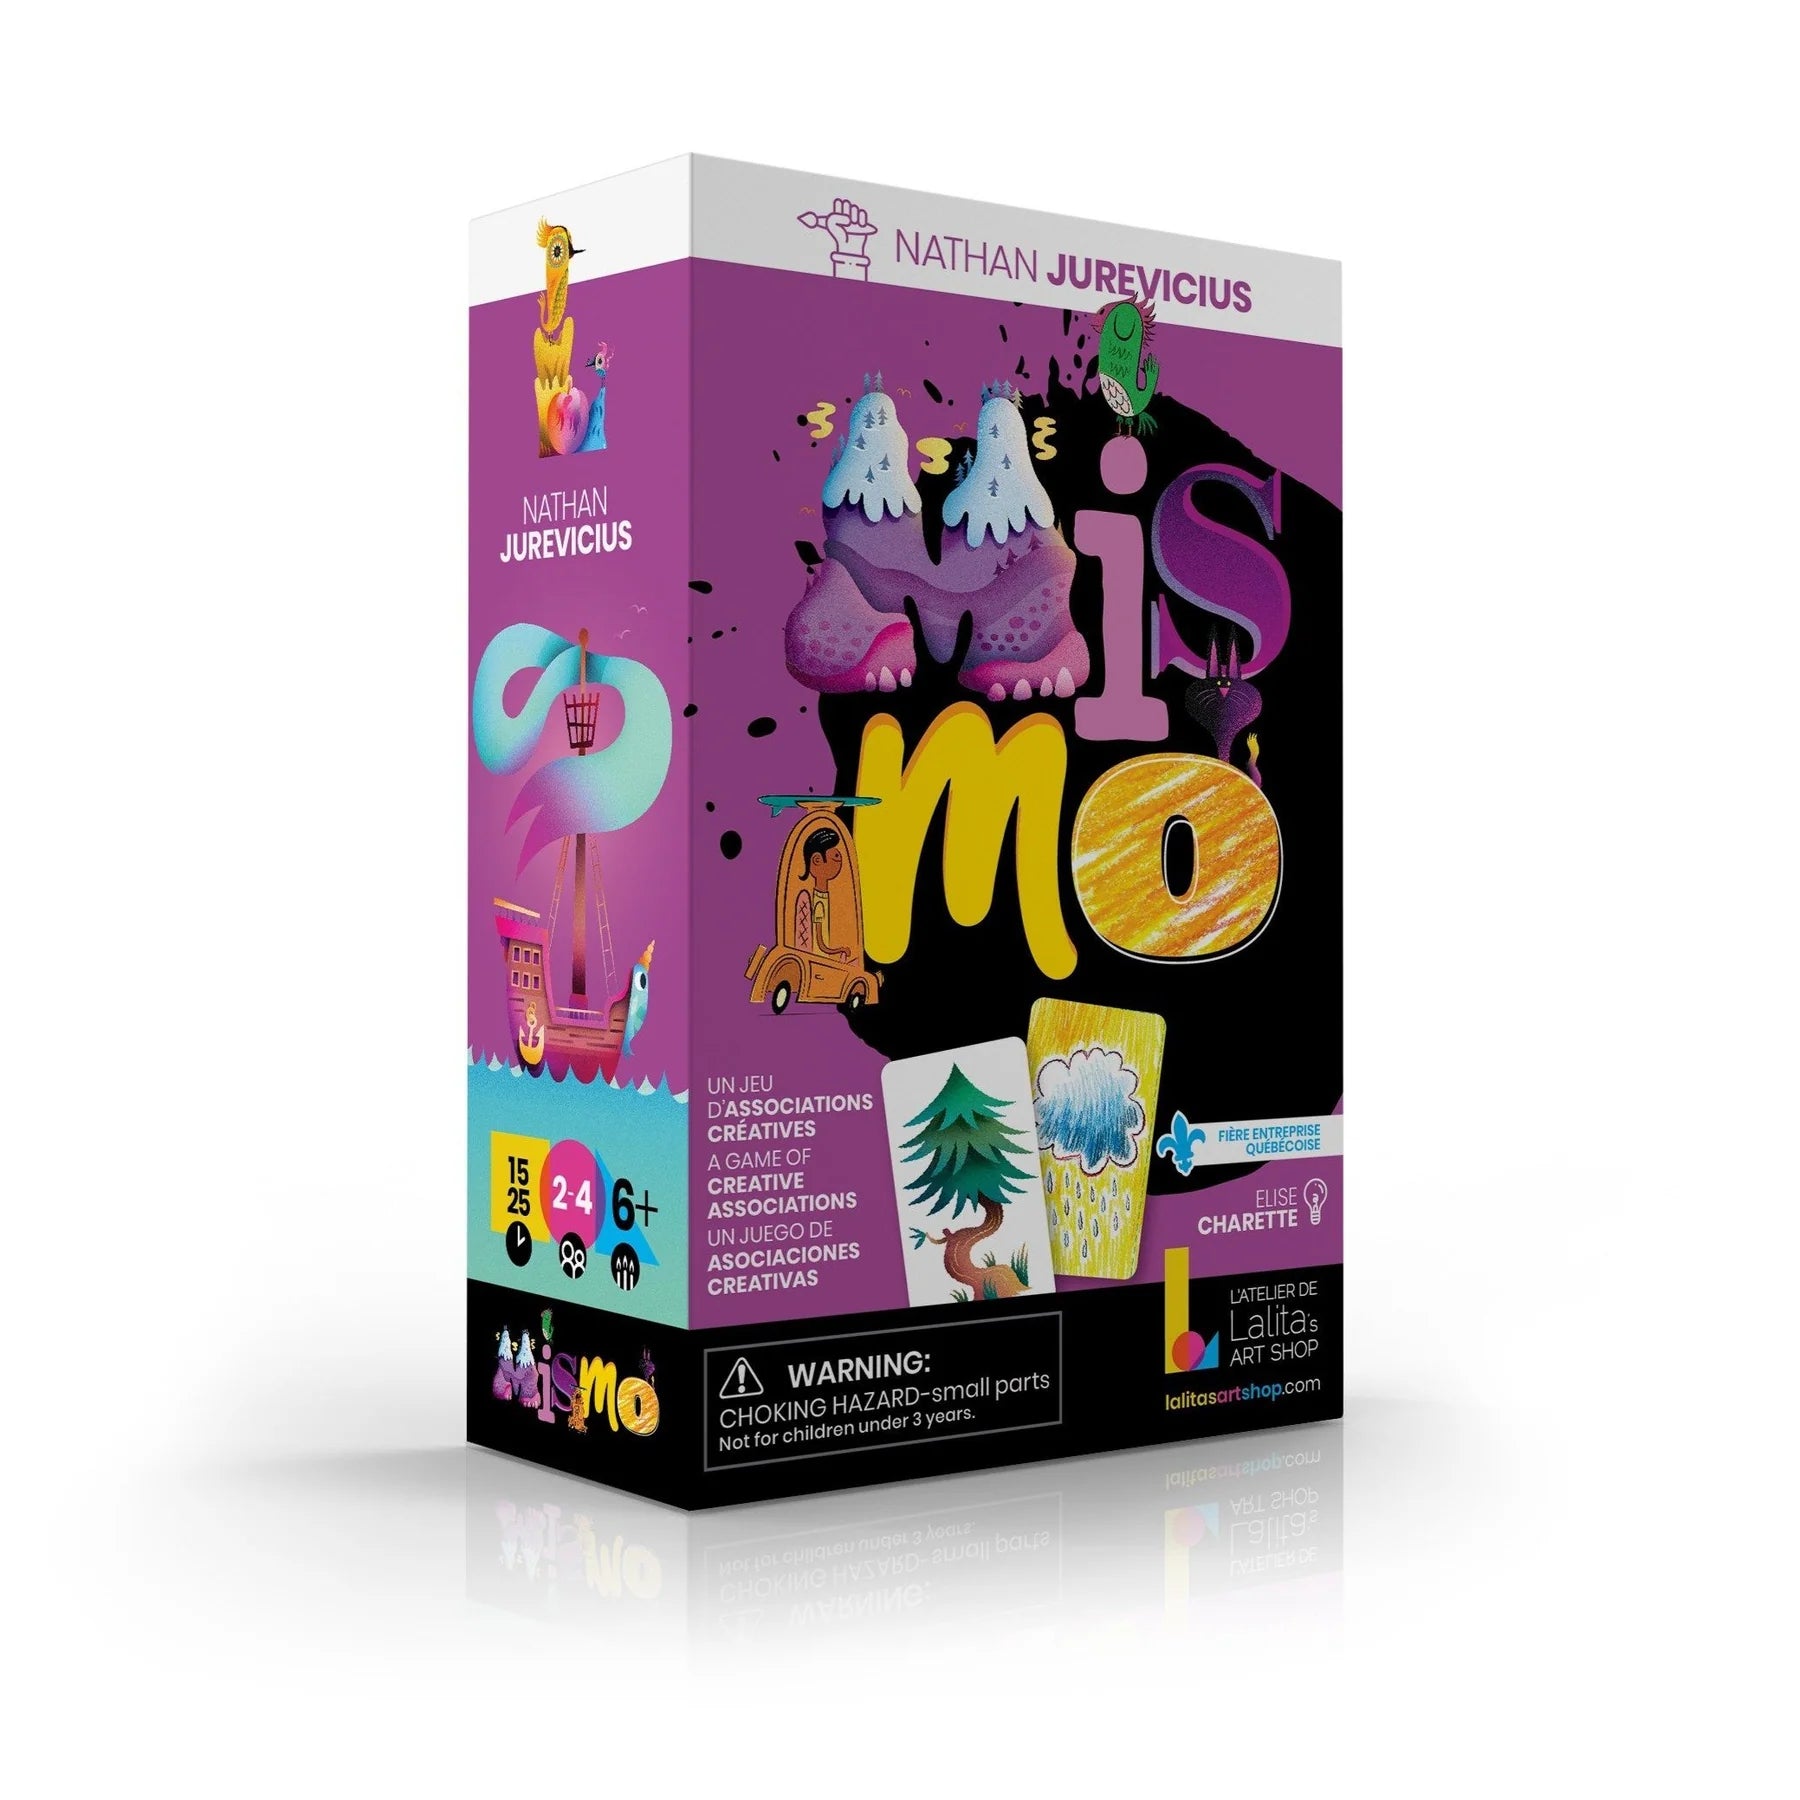 MISMO - A GAME OF CREATIVE ASSOCIATIONS (Lalita's Art Shop)